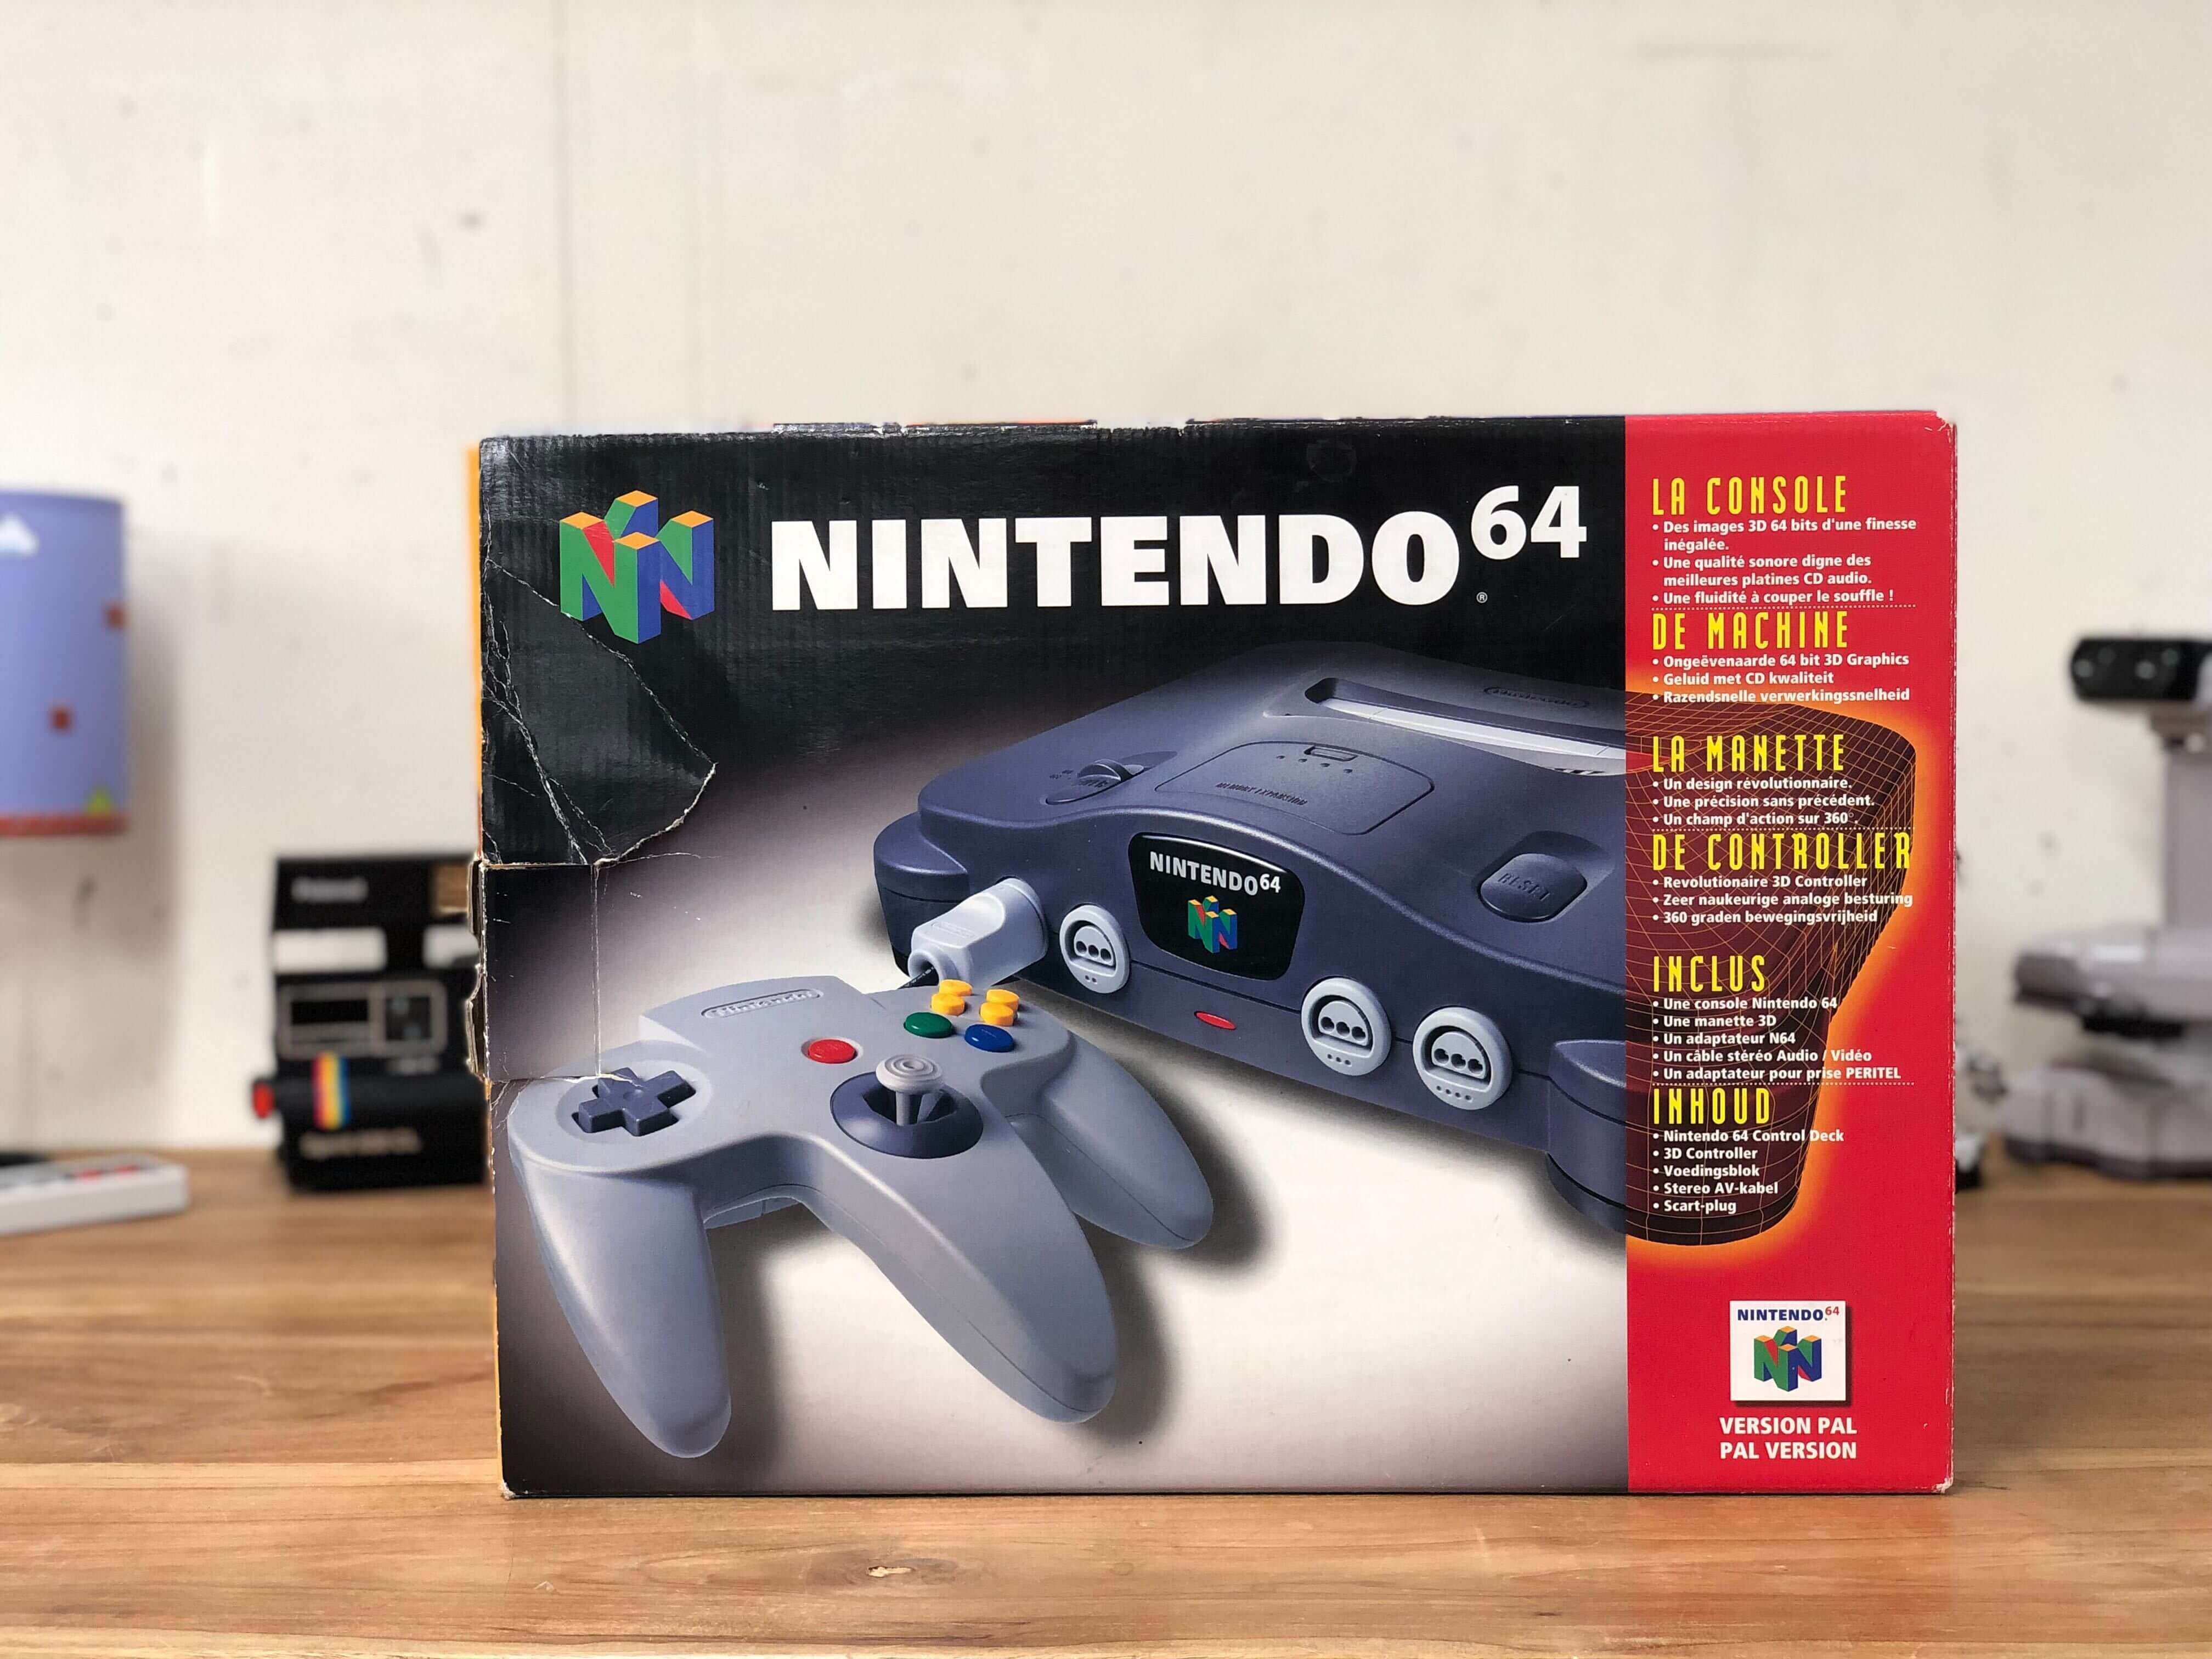 Nintendo 64 Starter Pack - Control Deck Edition [Complete] Kopen | Nintendo 64 Hardware